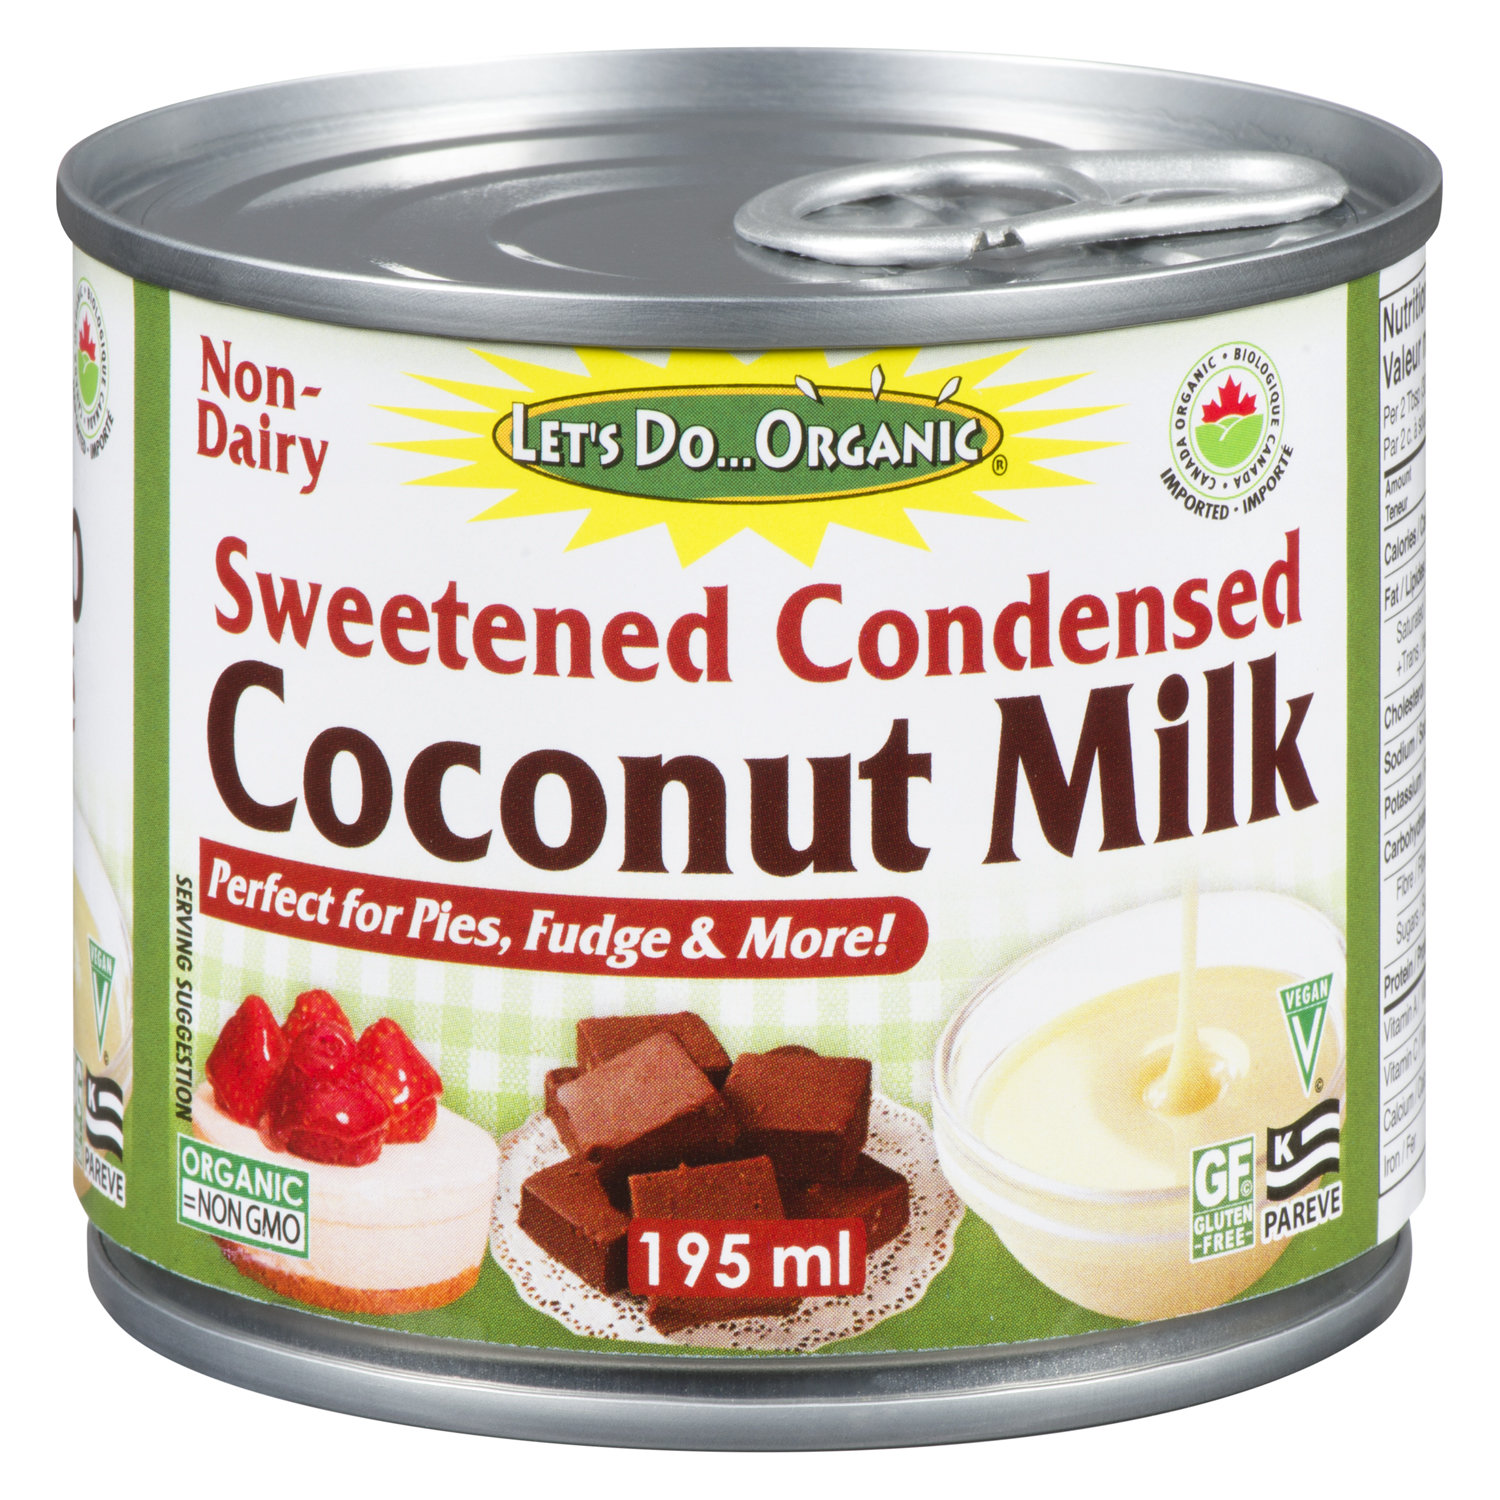 Organic sweetened condensed coconut milk